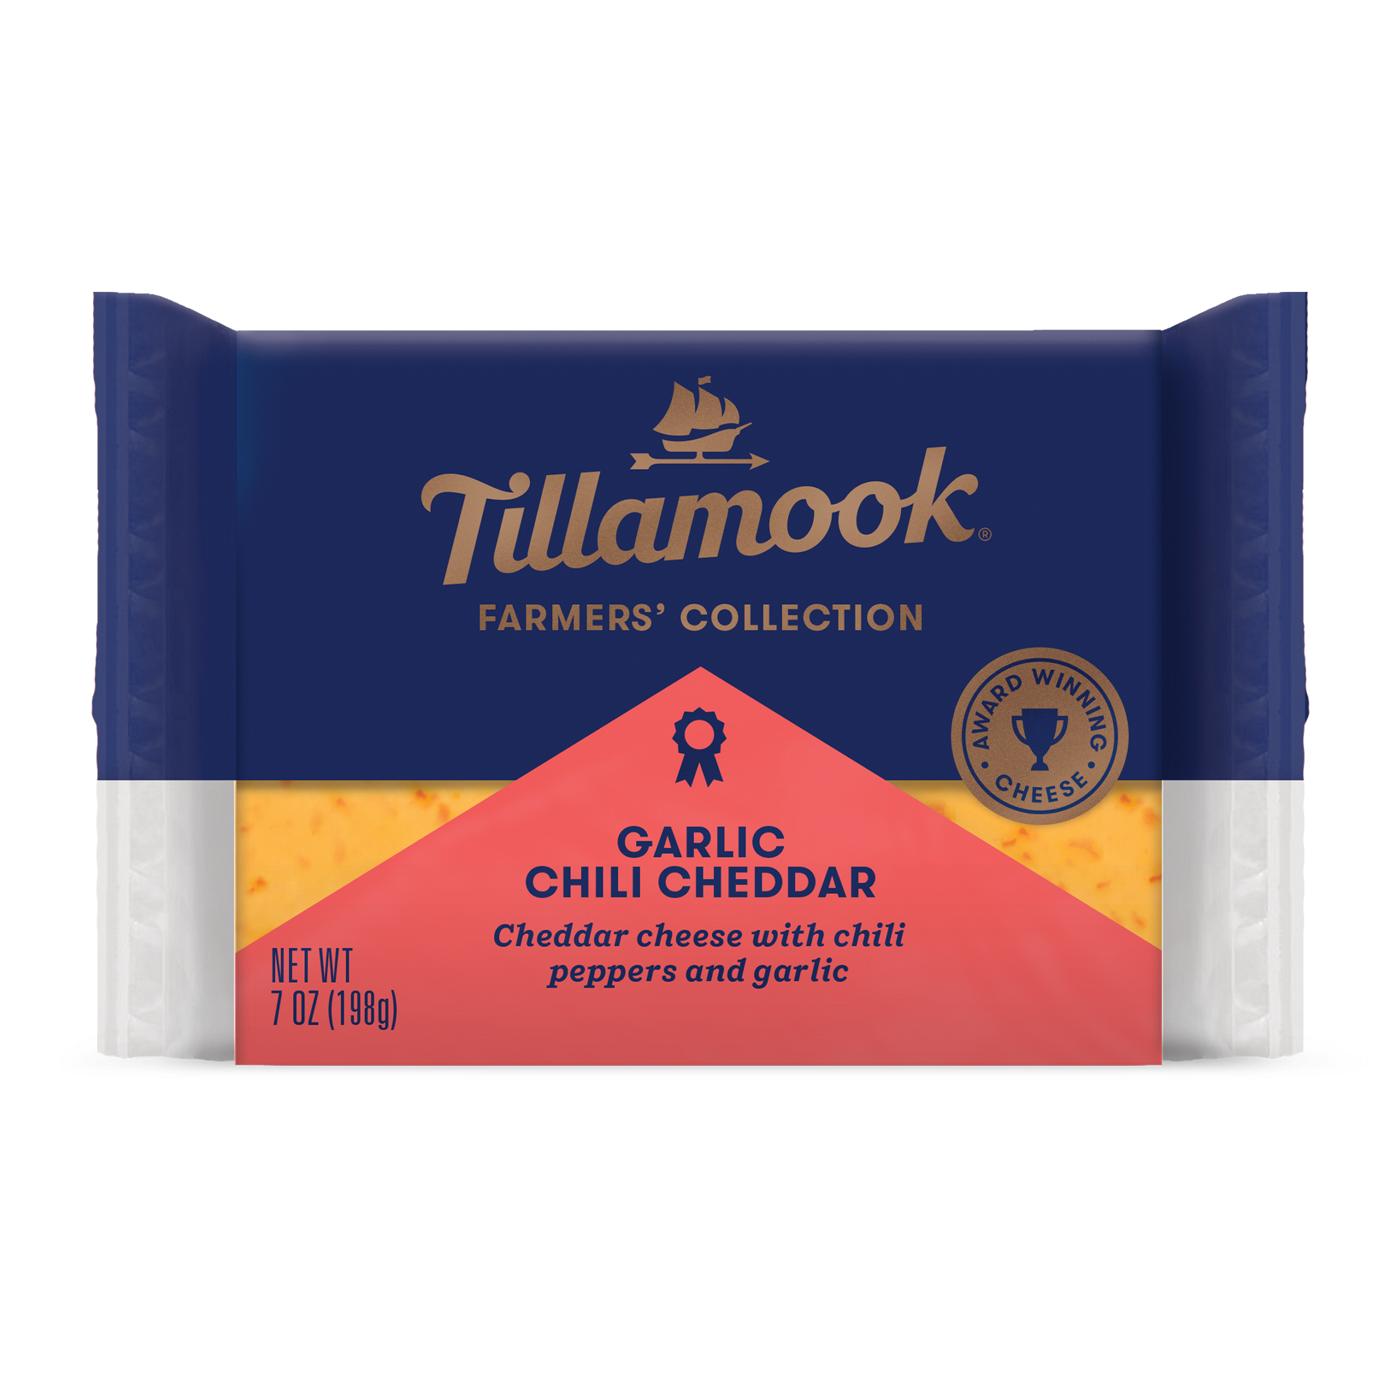 Tillamook Farmers' Collection Garlic Chili Cheddar Cheese; image 1 of 6